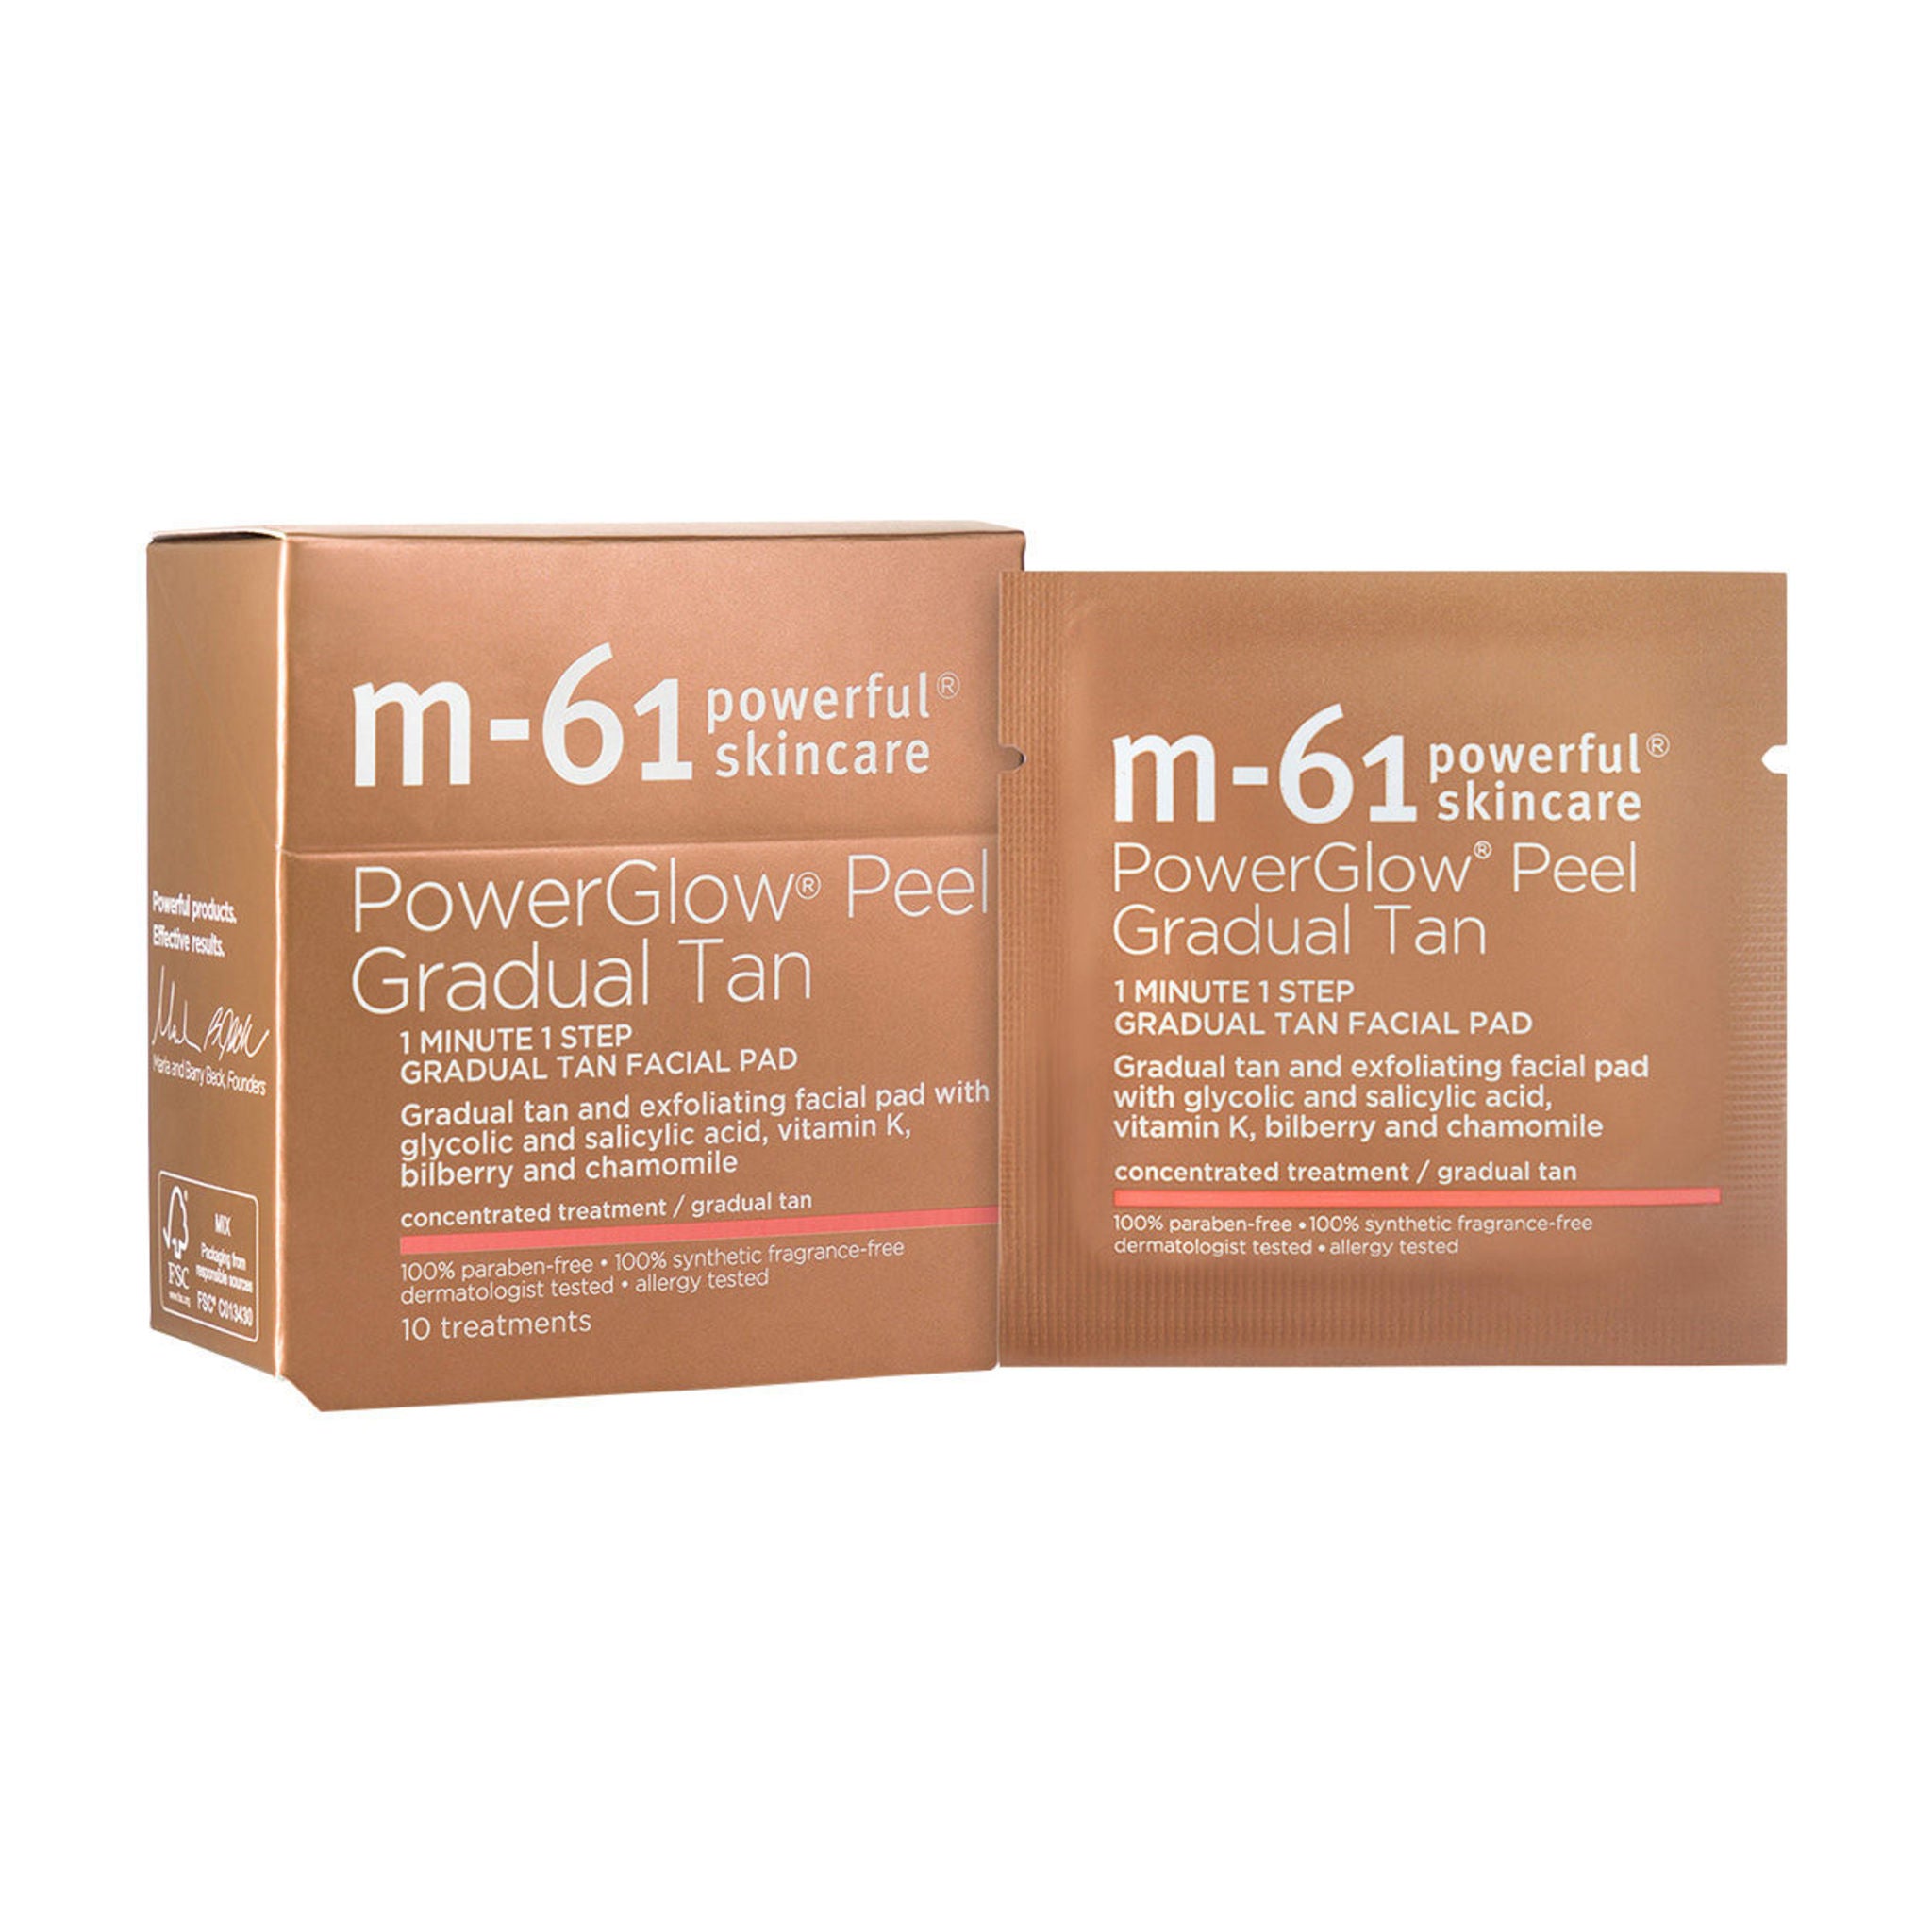 M-61 Powerglow Peel Gradual Tan Size variant: 10 treatments main image.